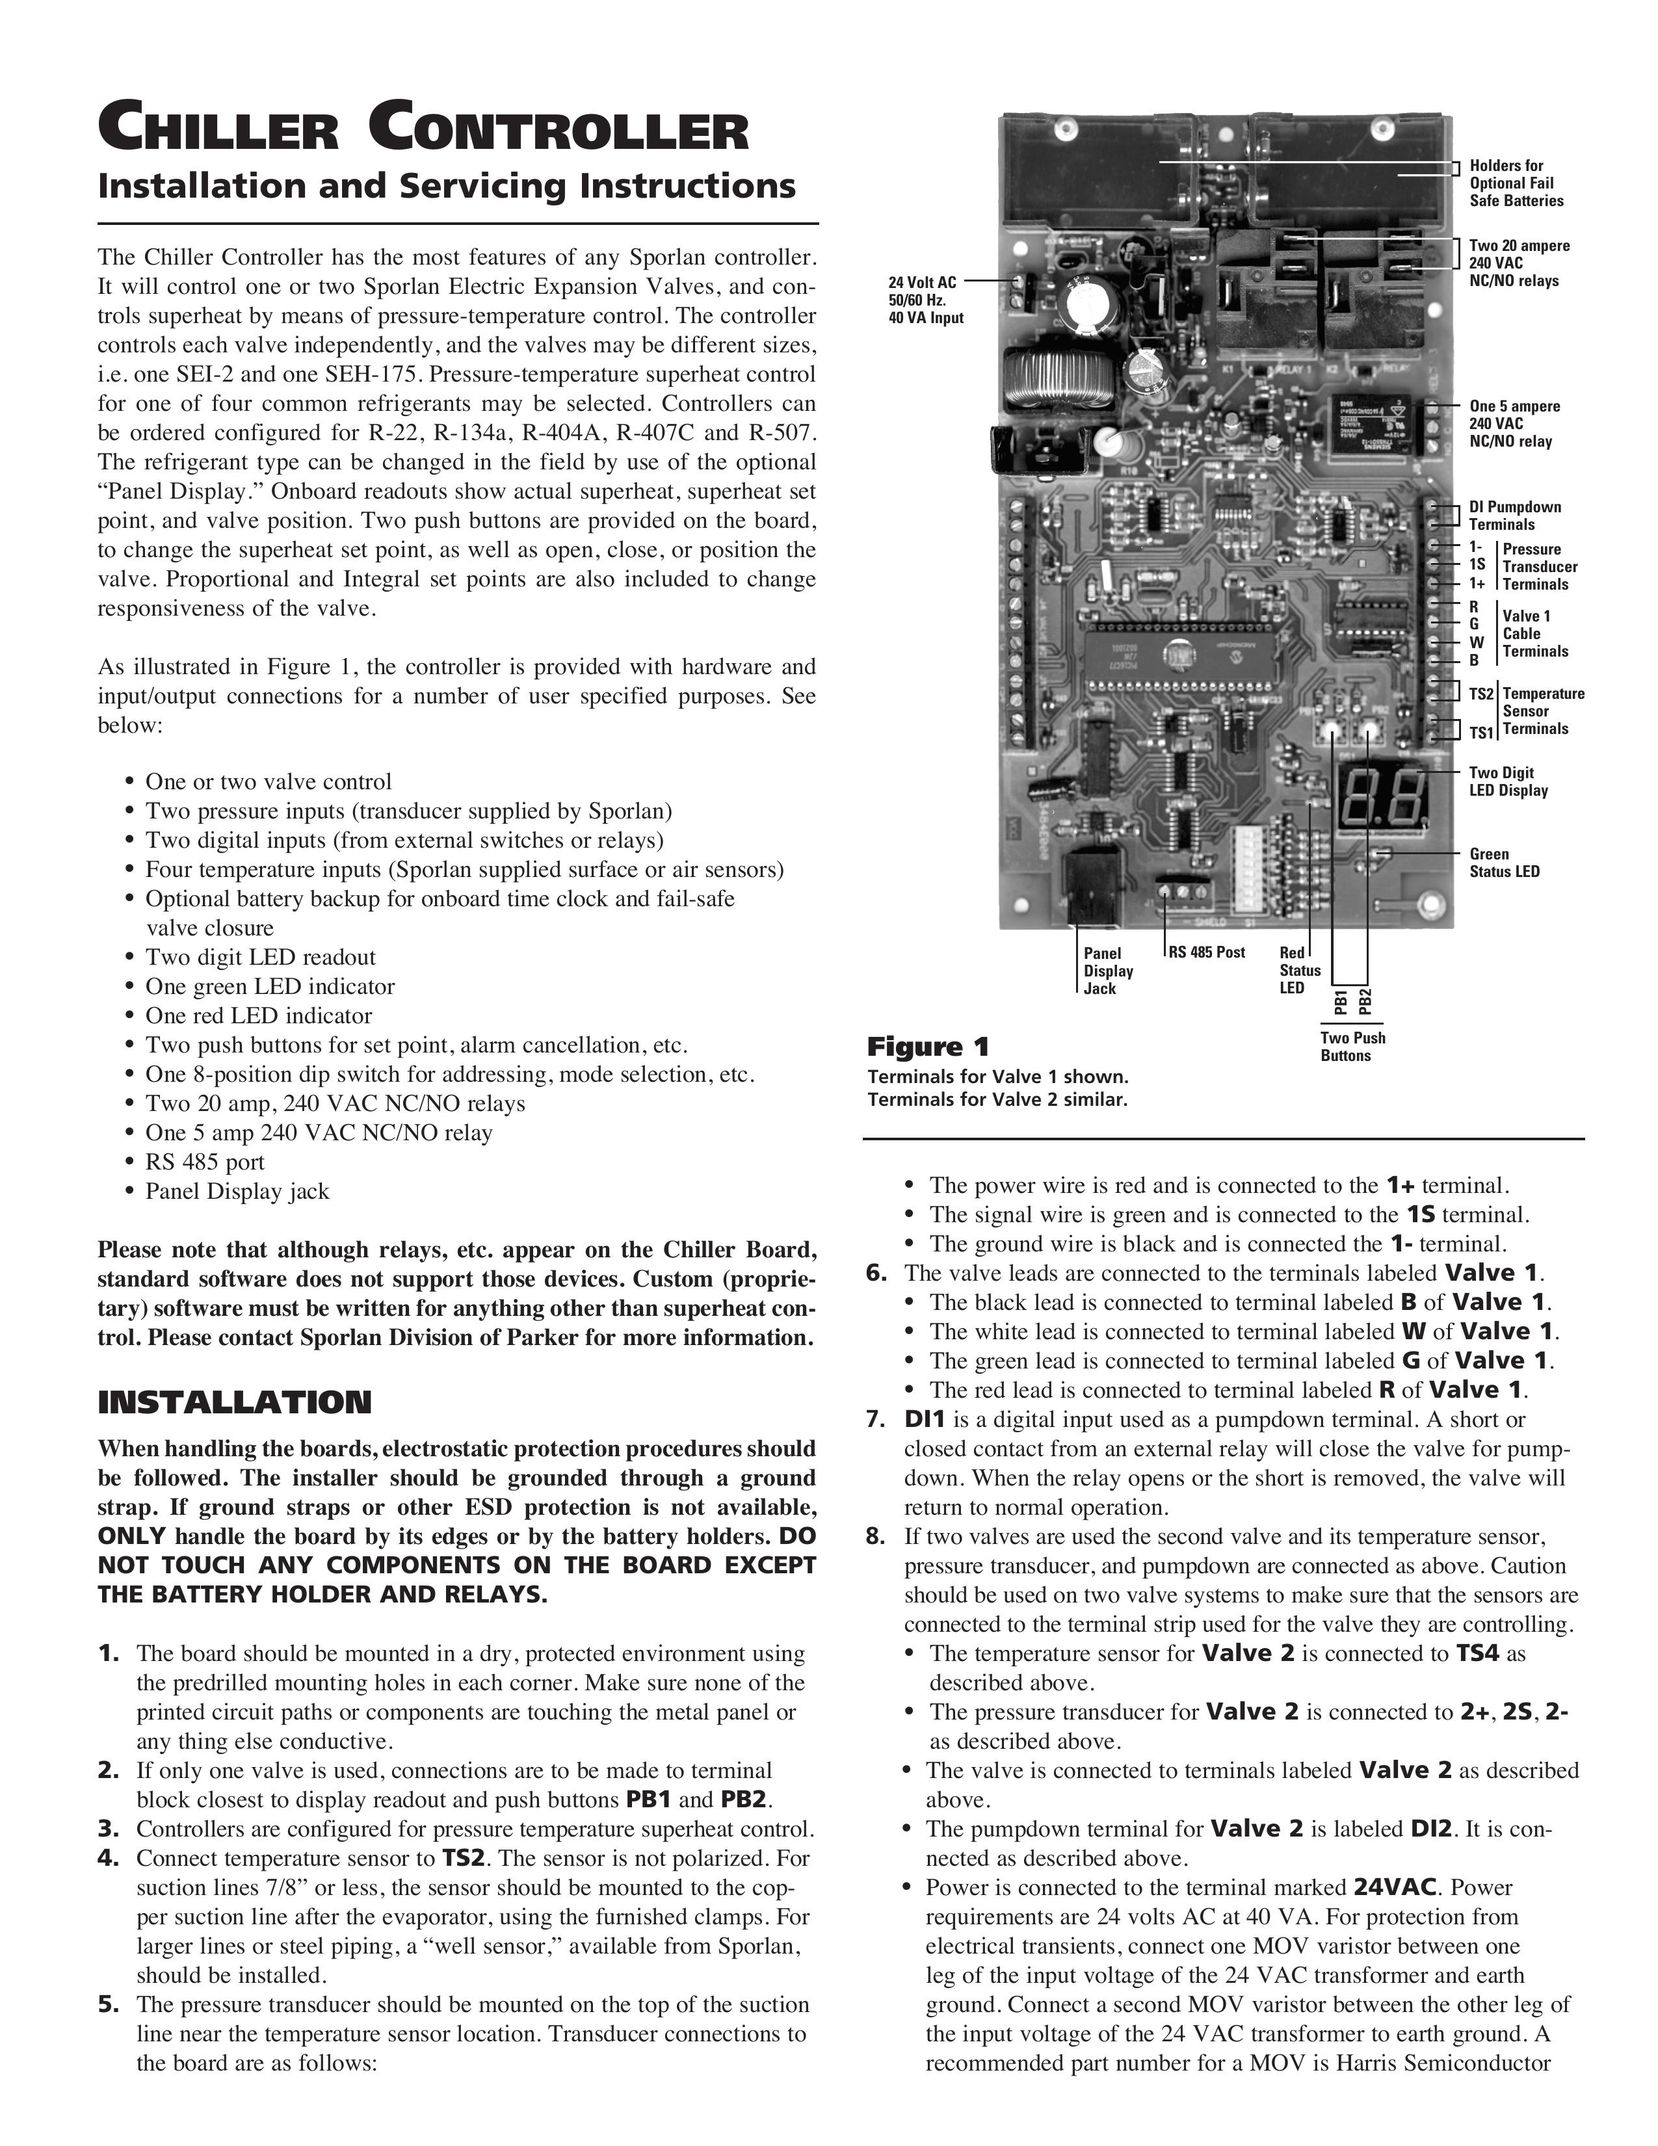 Parker Hannifin SEI-2 Network Card User Manual